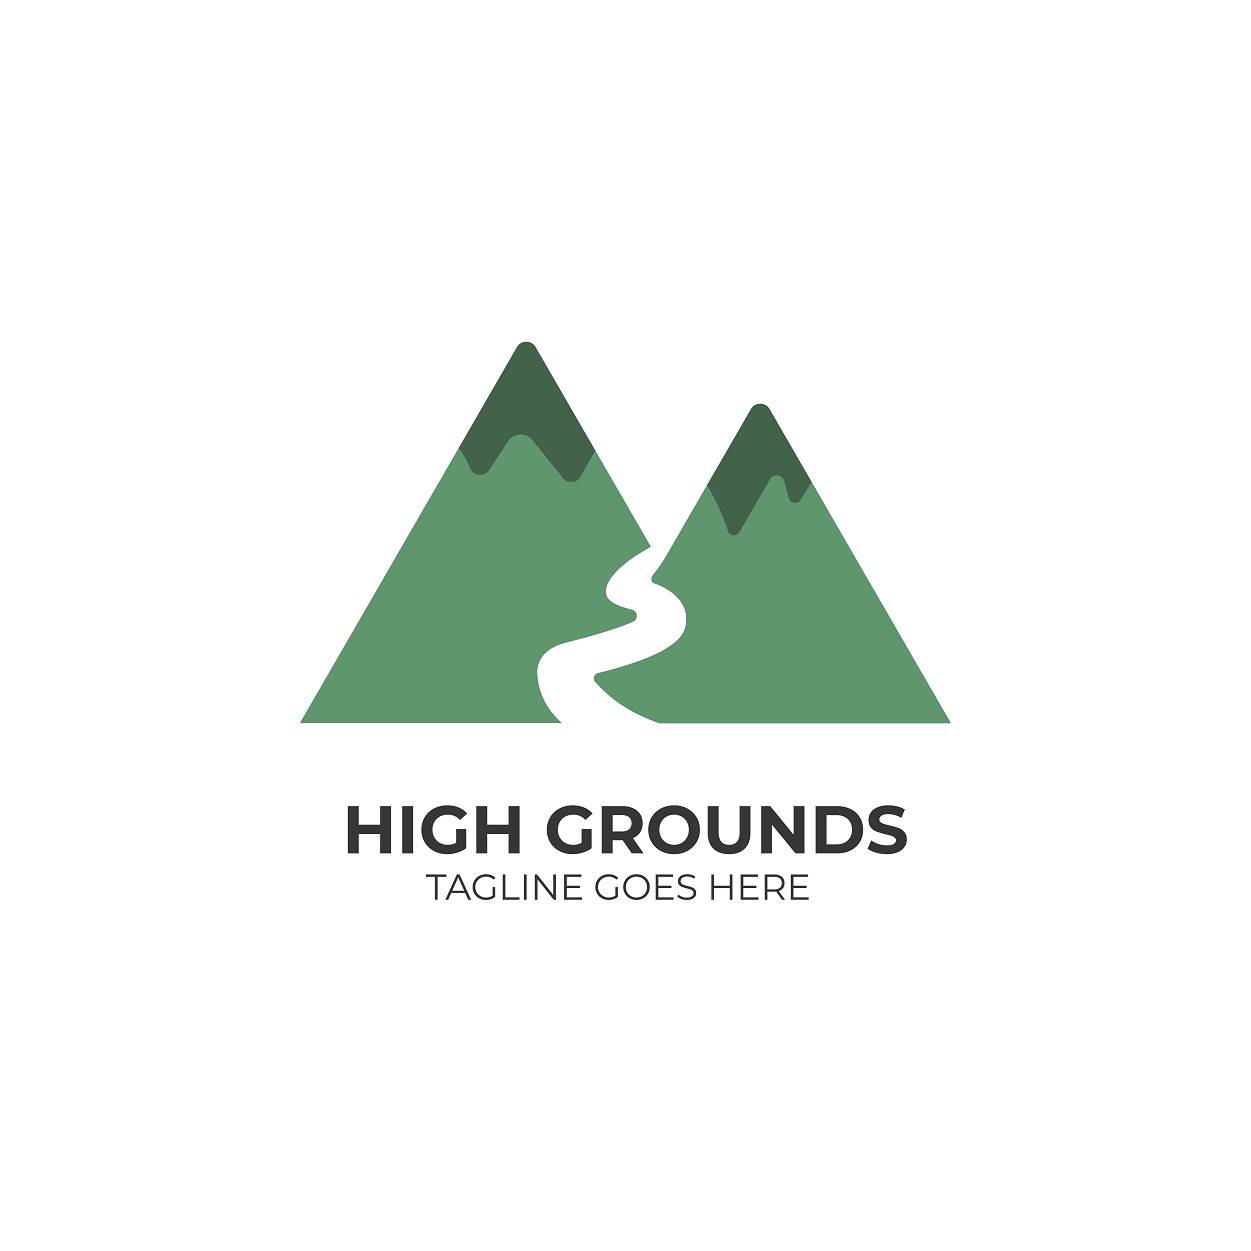 High grounds mountains vector logo in green color